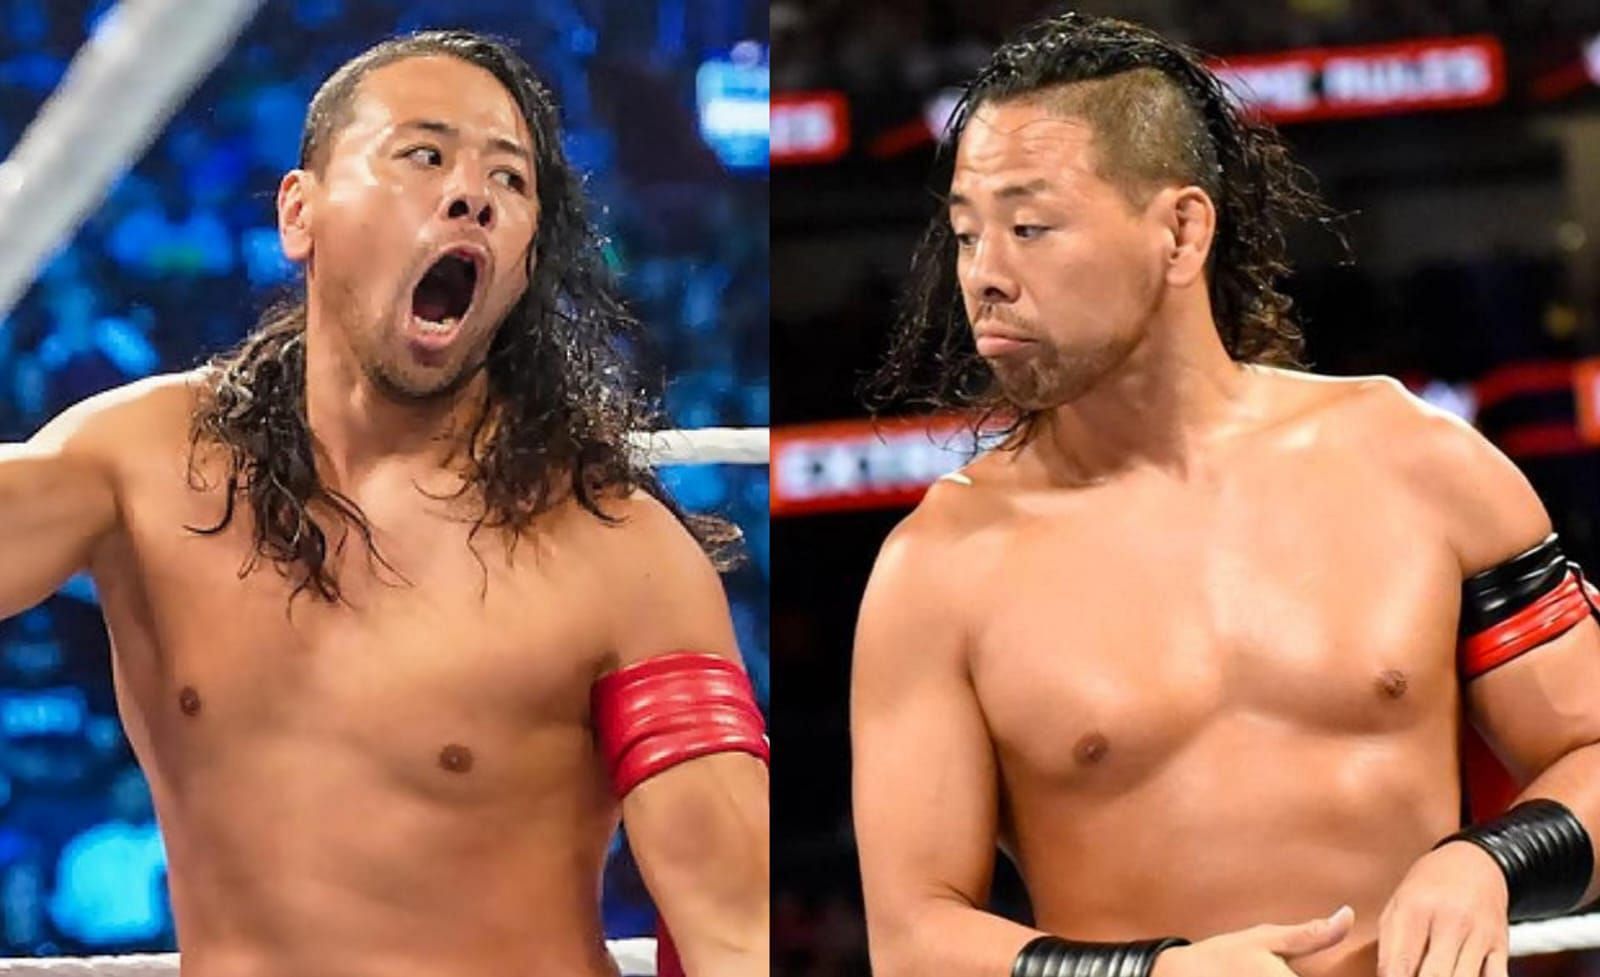 Shinsuke Nakamura is currently drafted on RAW